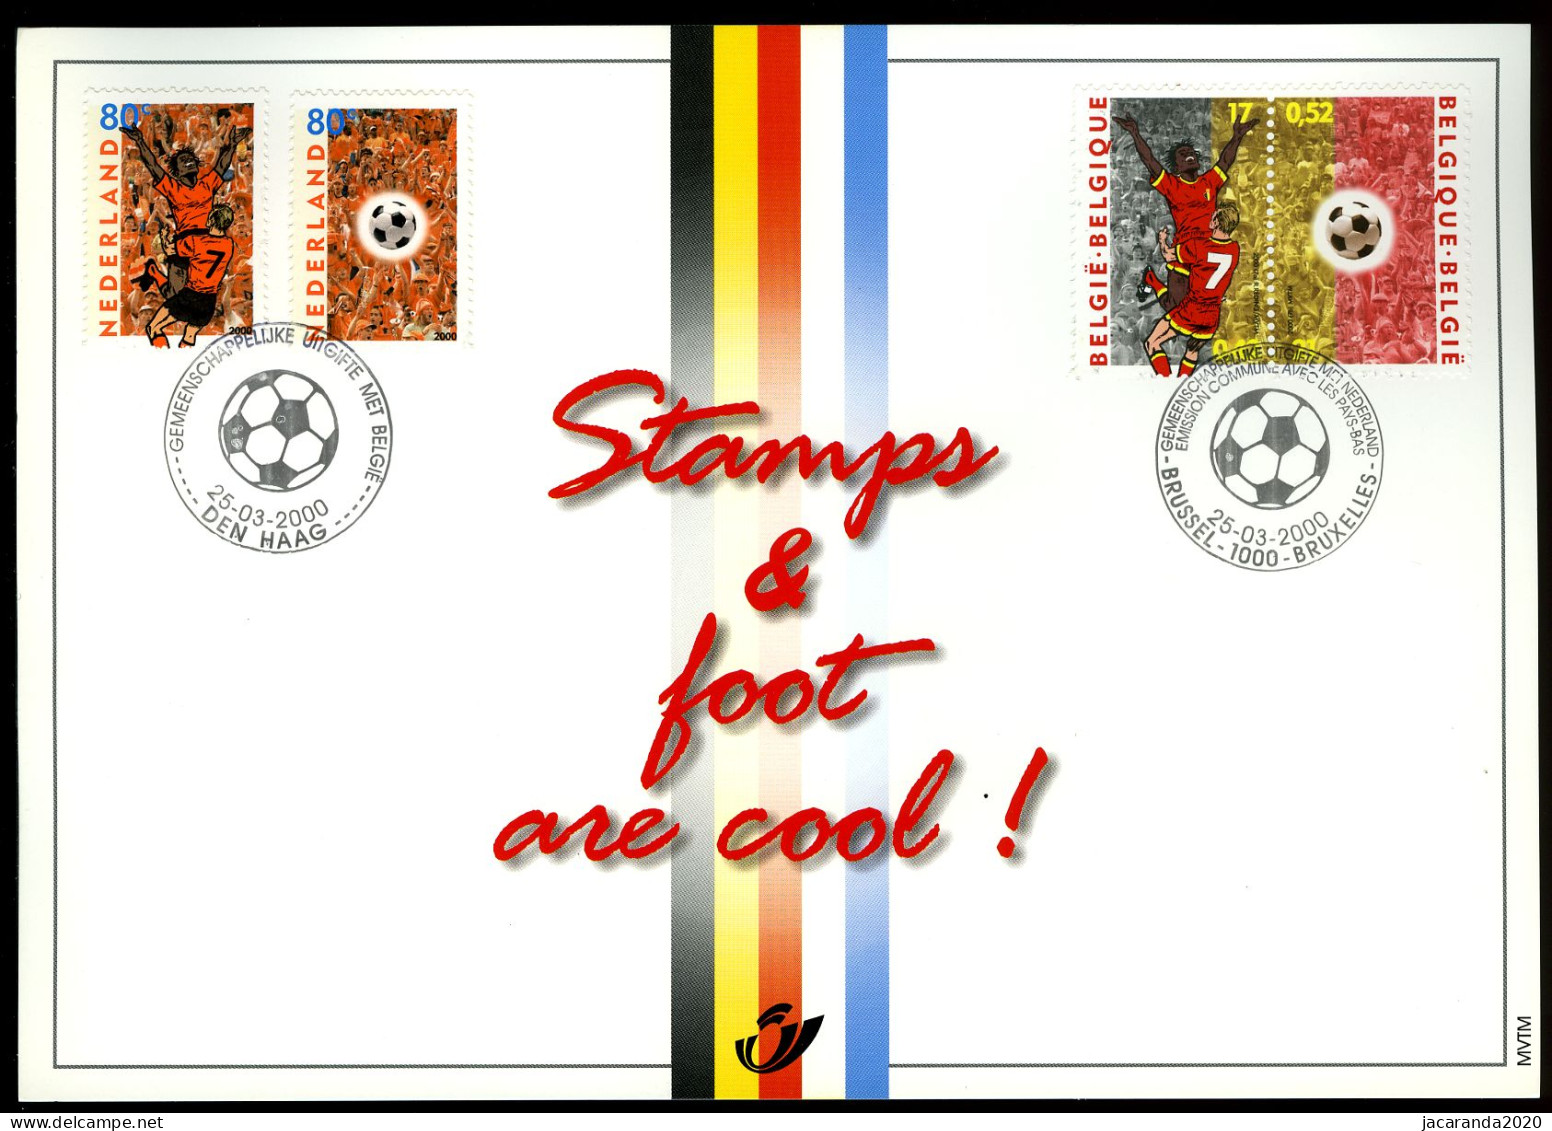 België 2892 HK - Europees Kampioenschap Voetbal - Football - Gem. Uitgifte Met Nederland - 2000 - Erinnerungskarten – Gemeinschaftsausgaben [HK]